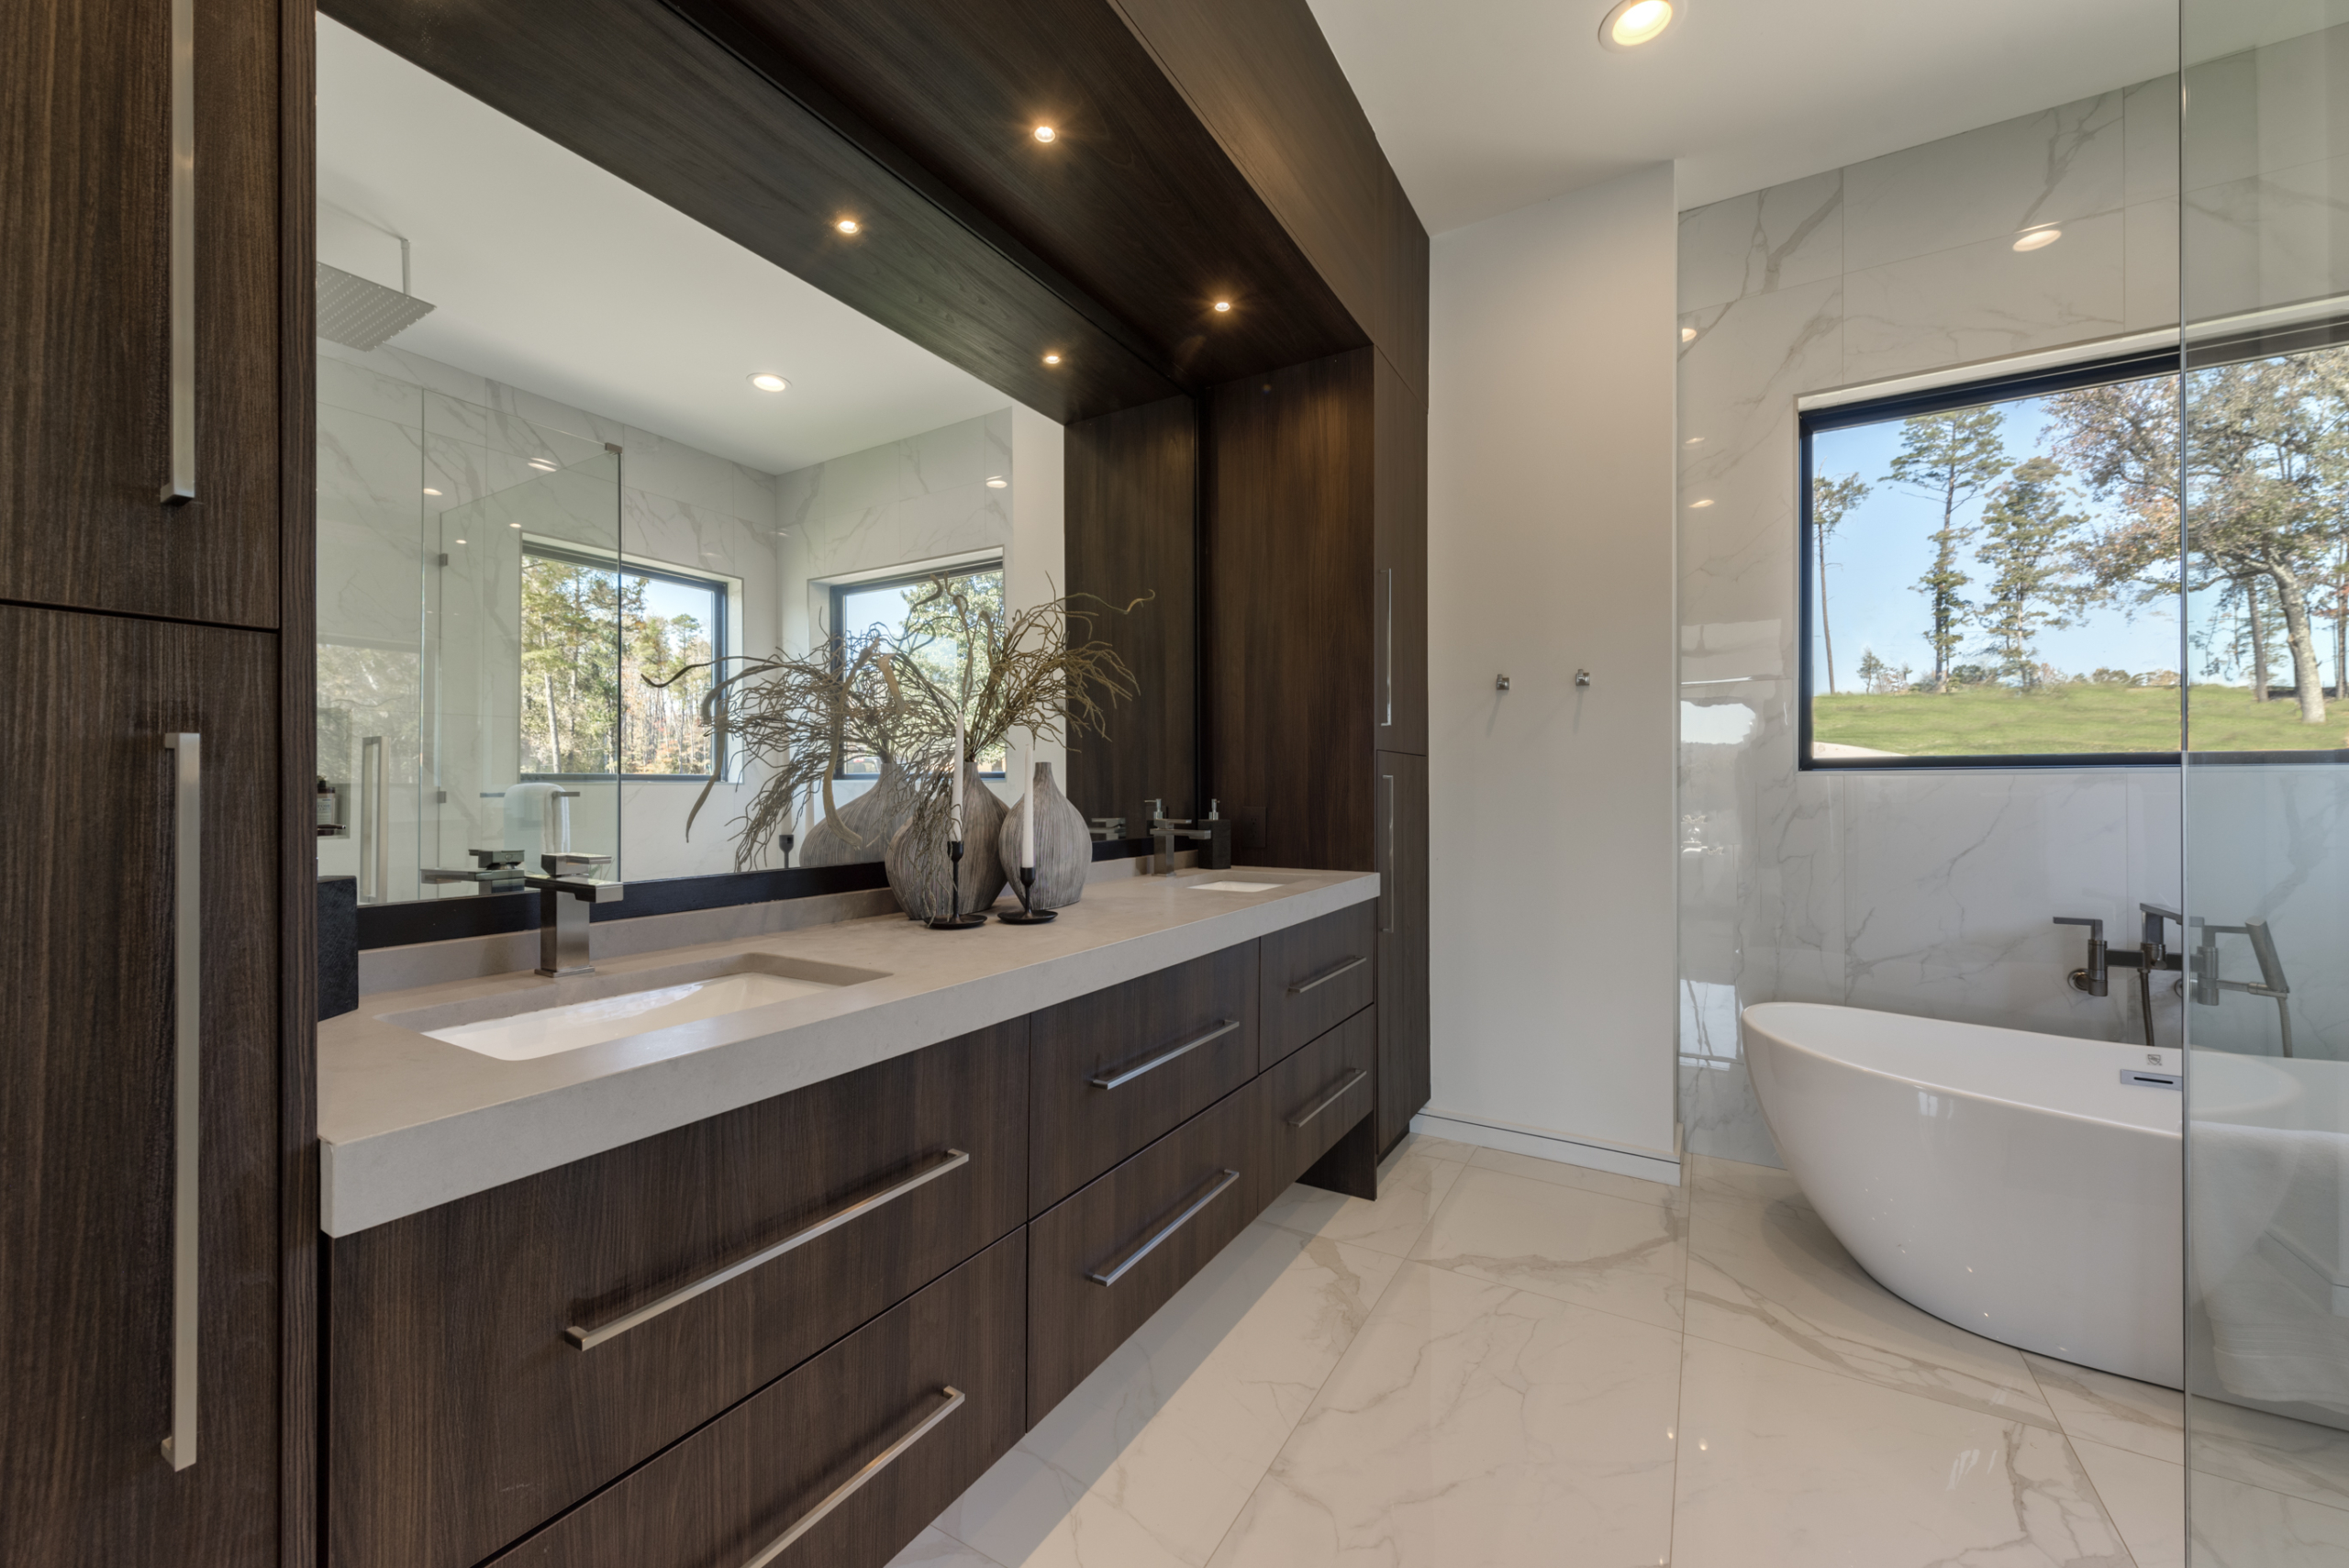 Modern bedroom bathroom with custom large floor to ceiling double vanity with dark wood and free standing tub